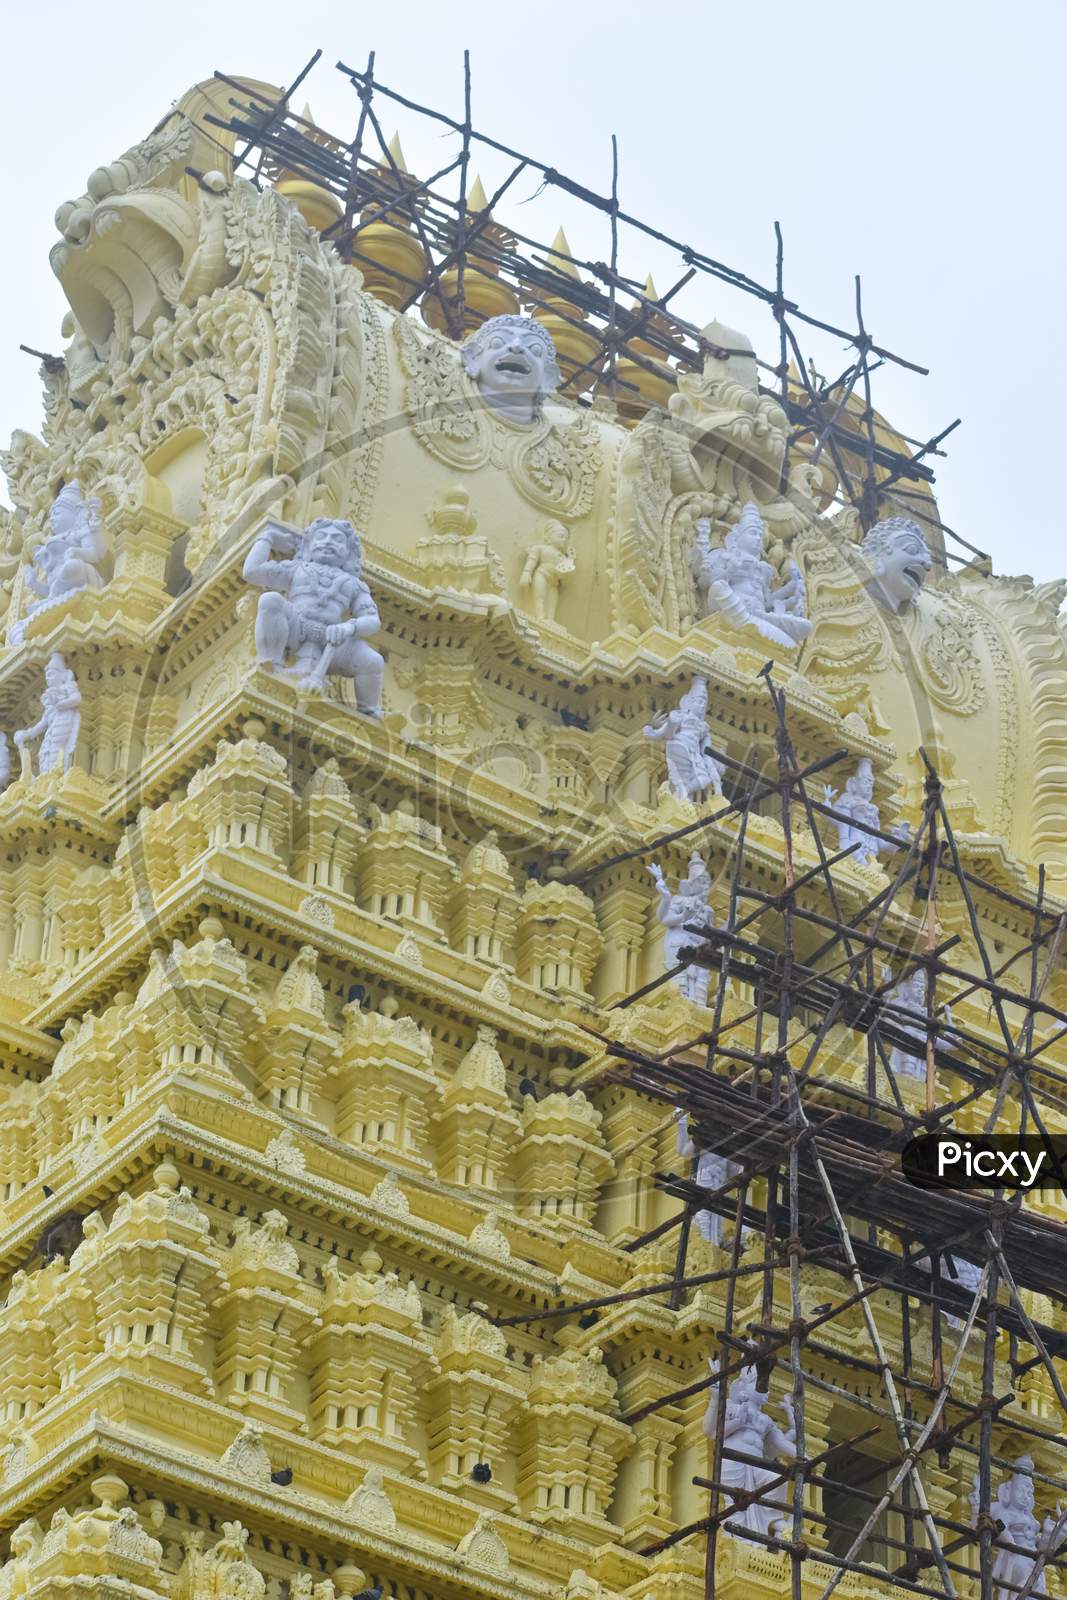 Chamundeshwari Temple Outlook At Mysore, Karnataka